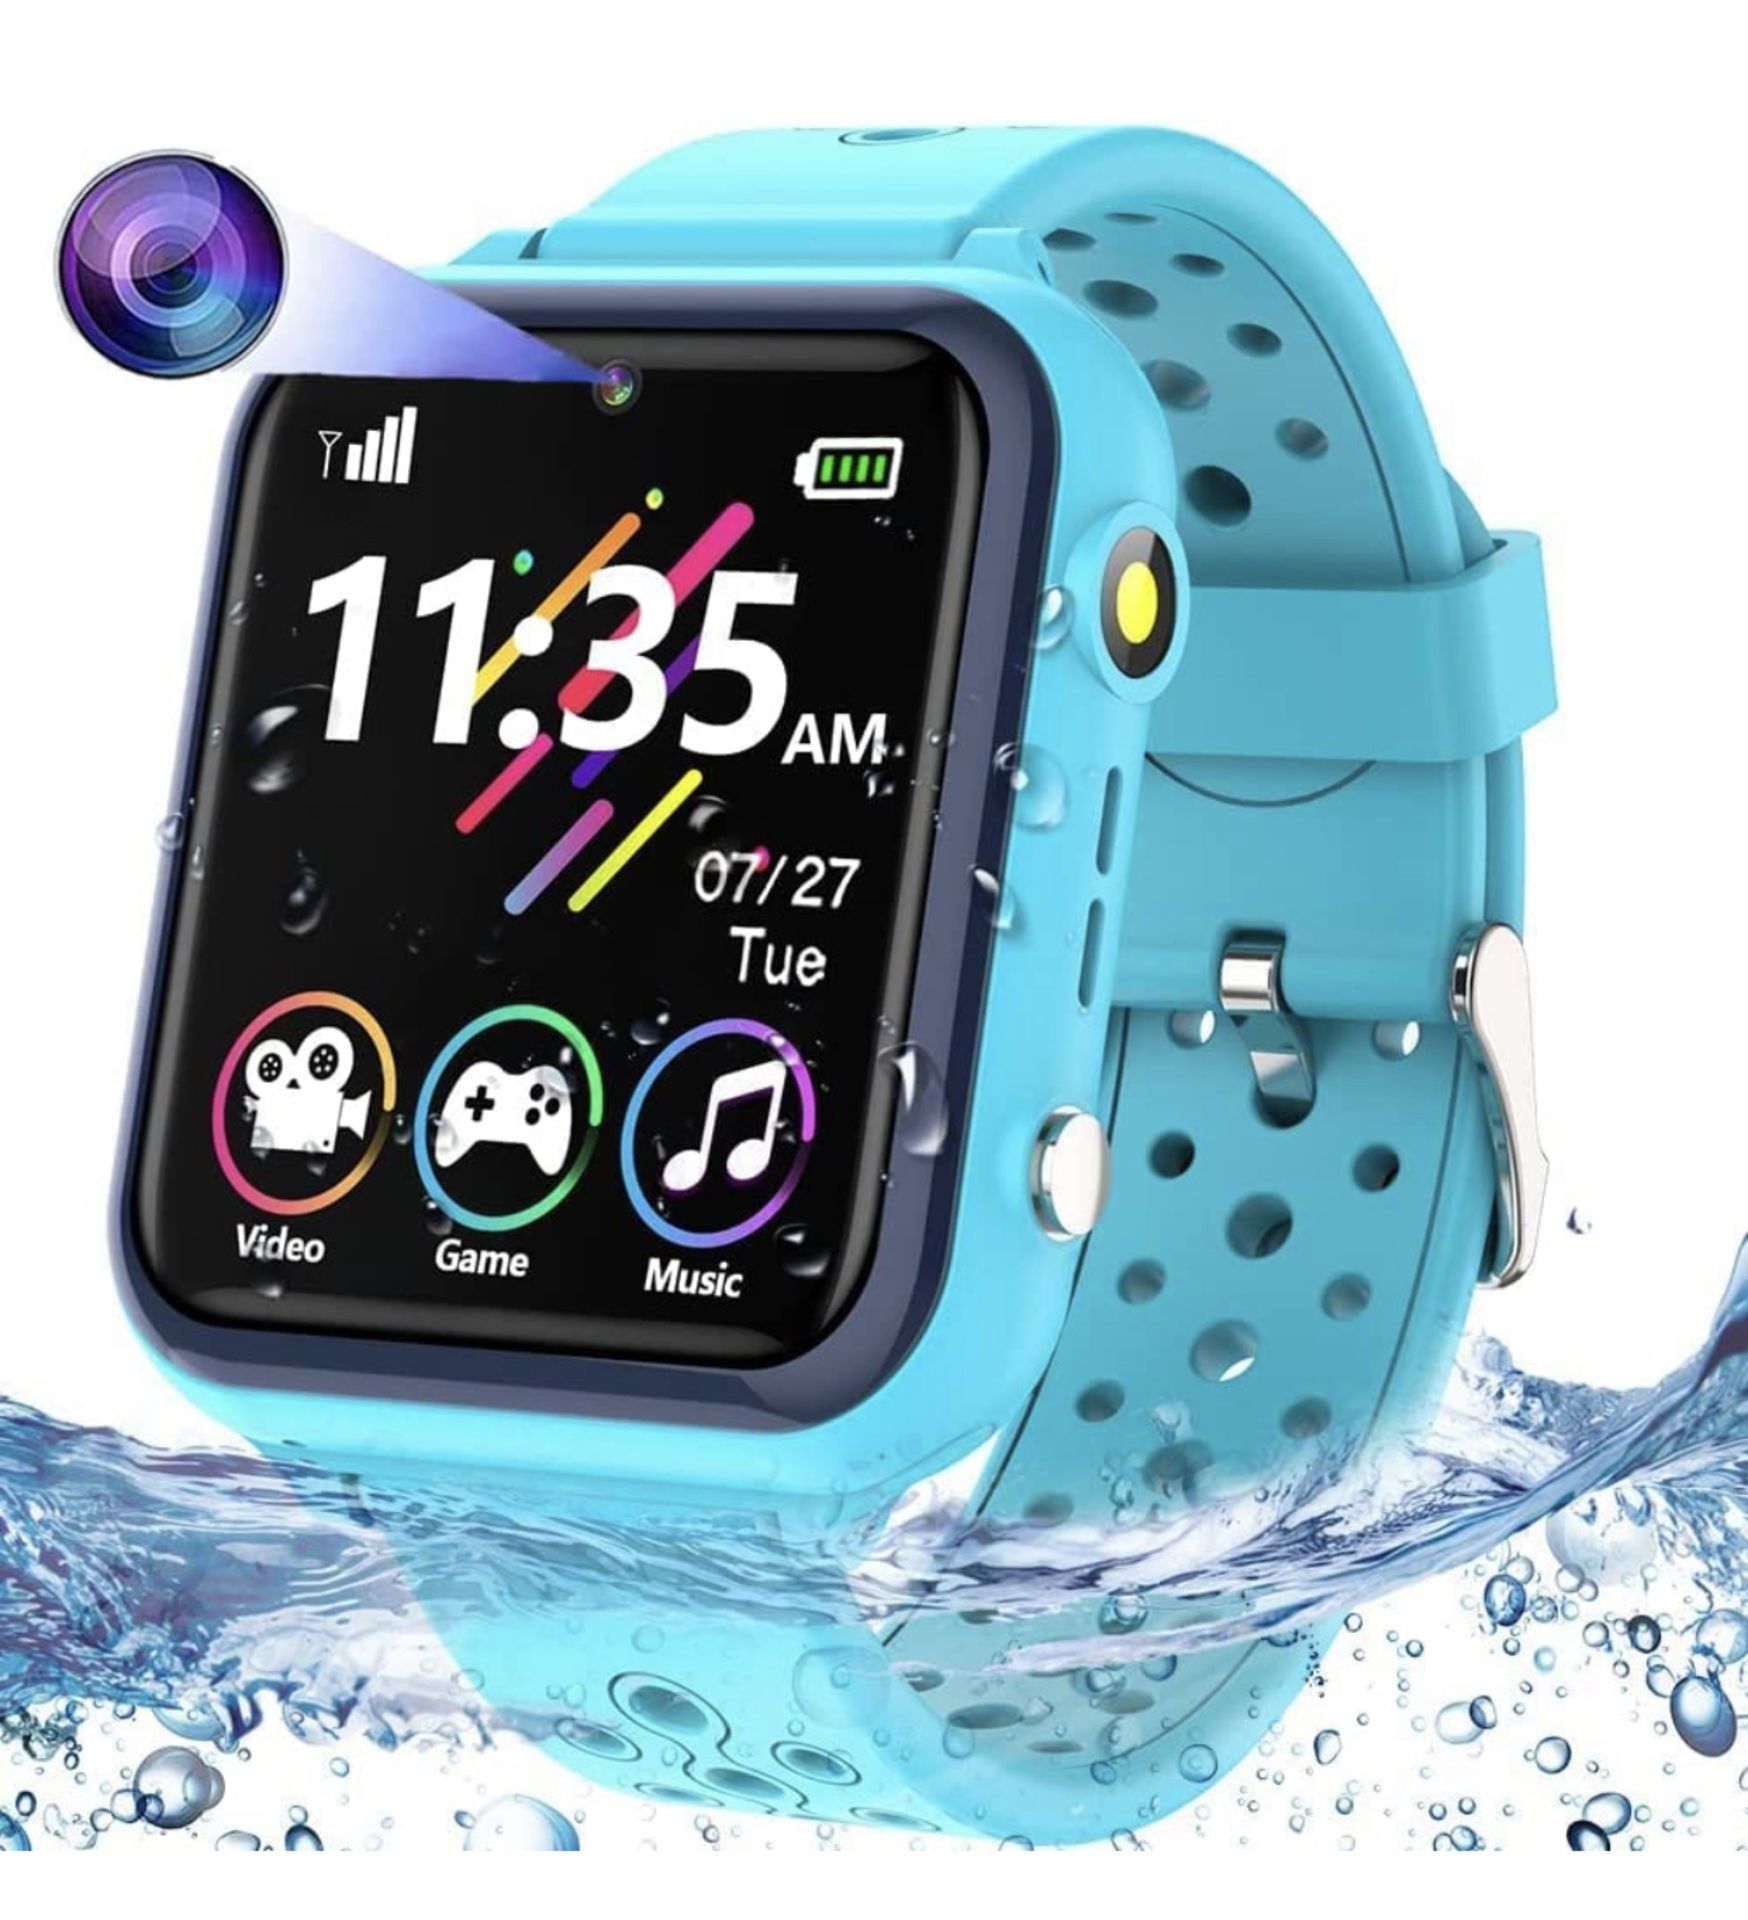 RRP £29.99 Kids Smart Watch Phone Waterproof Smartwatch with Music, Video, Camera